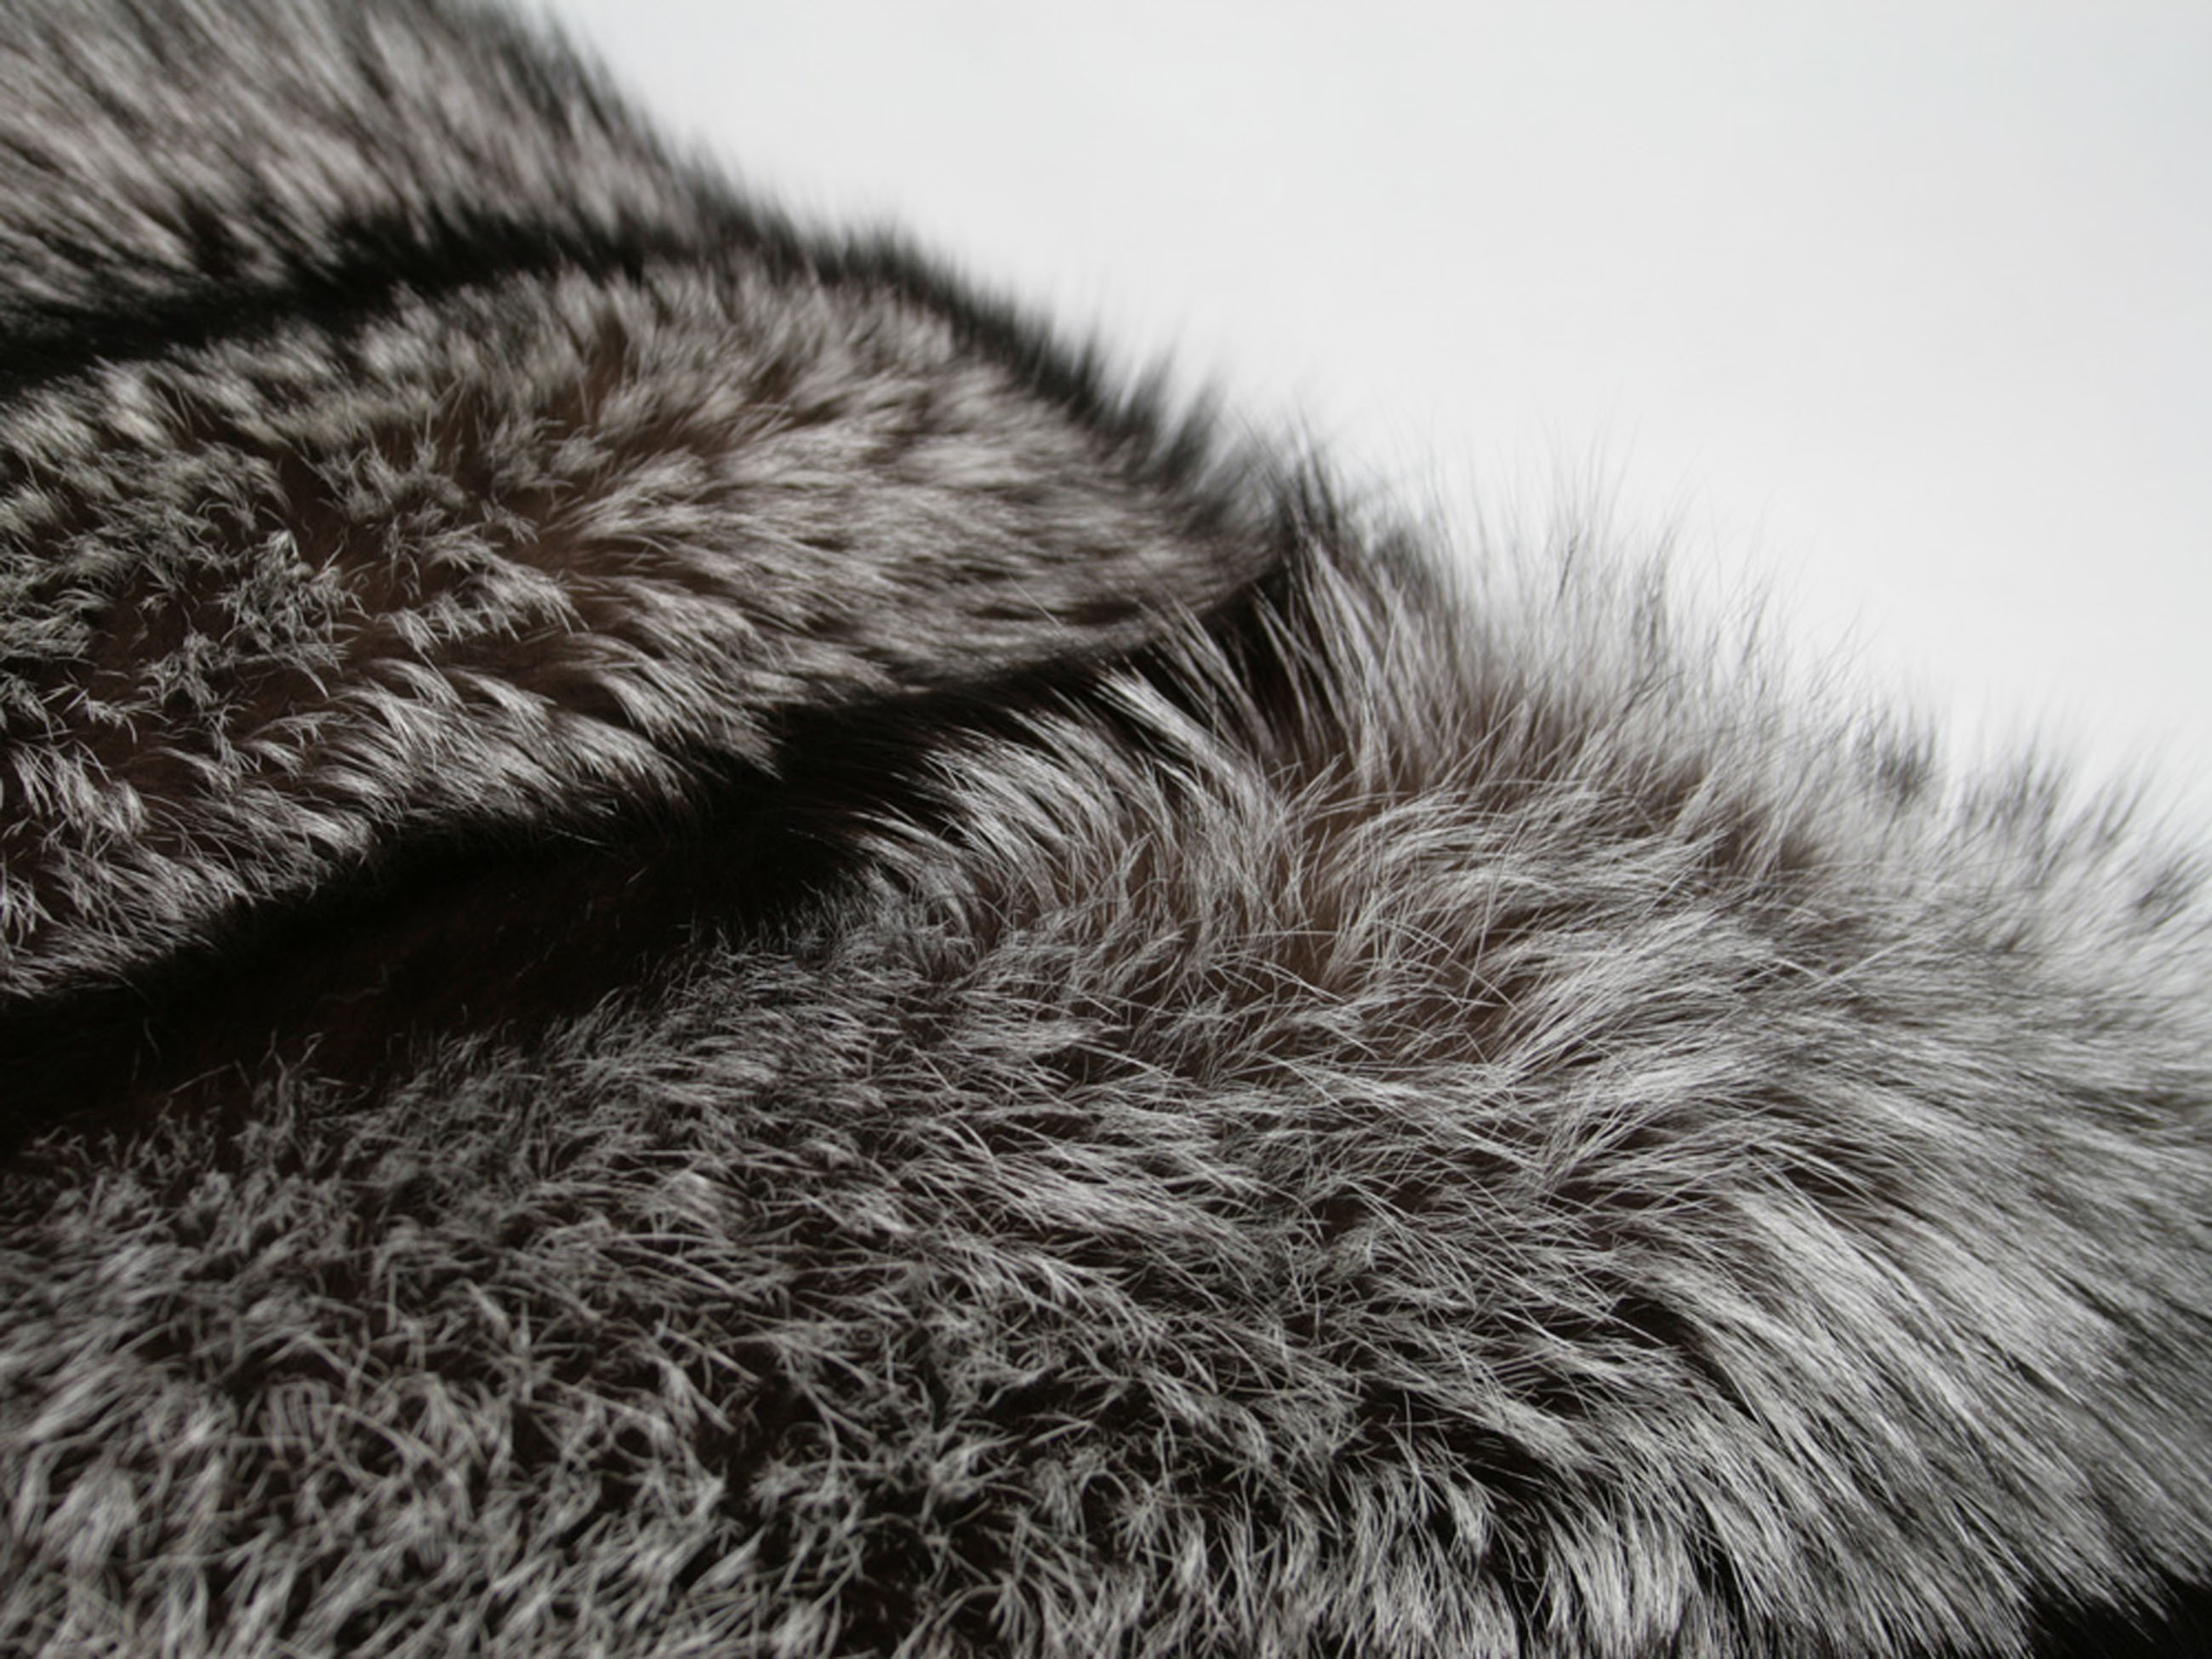 Silver fox fur pillow with - SAGA